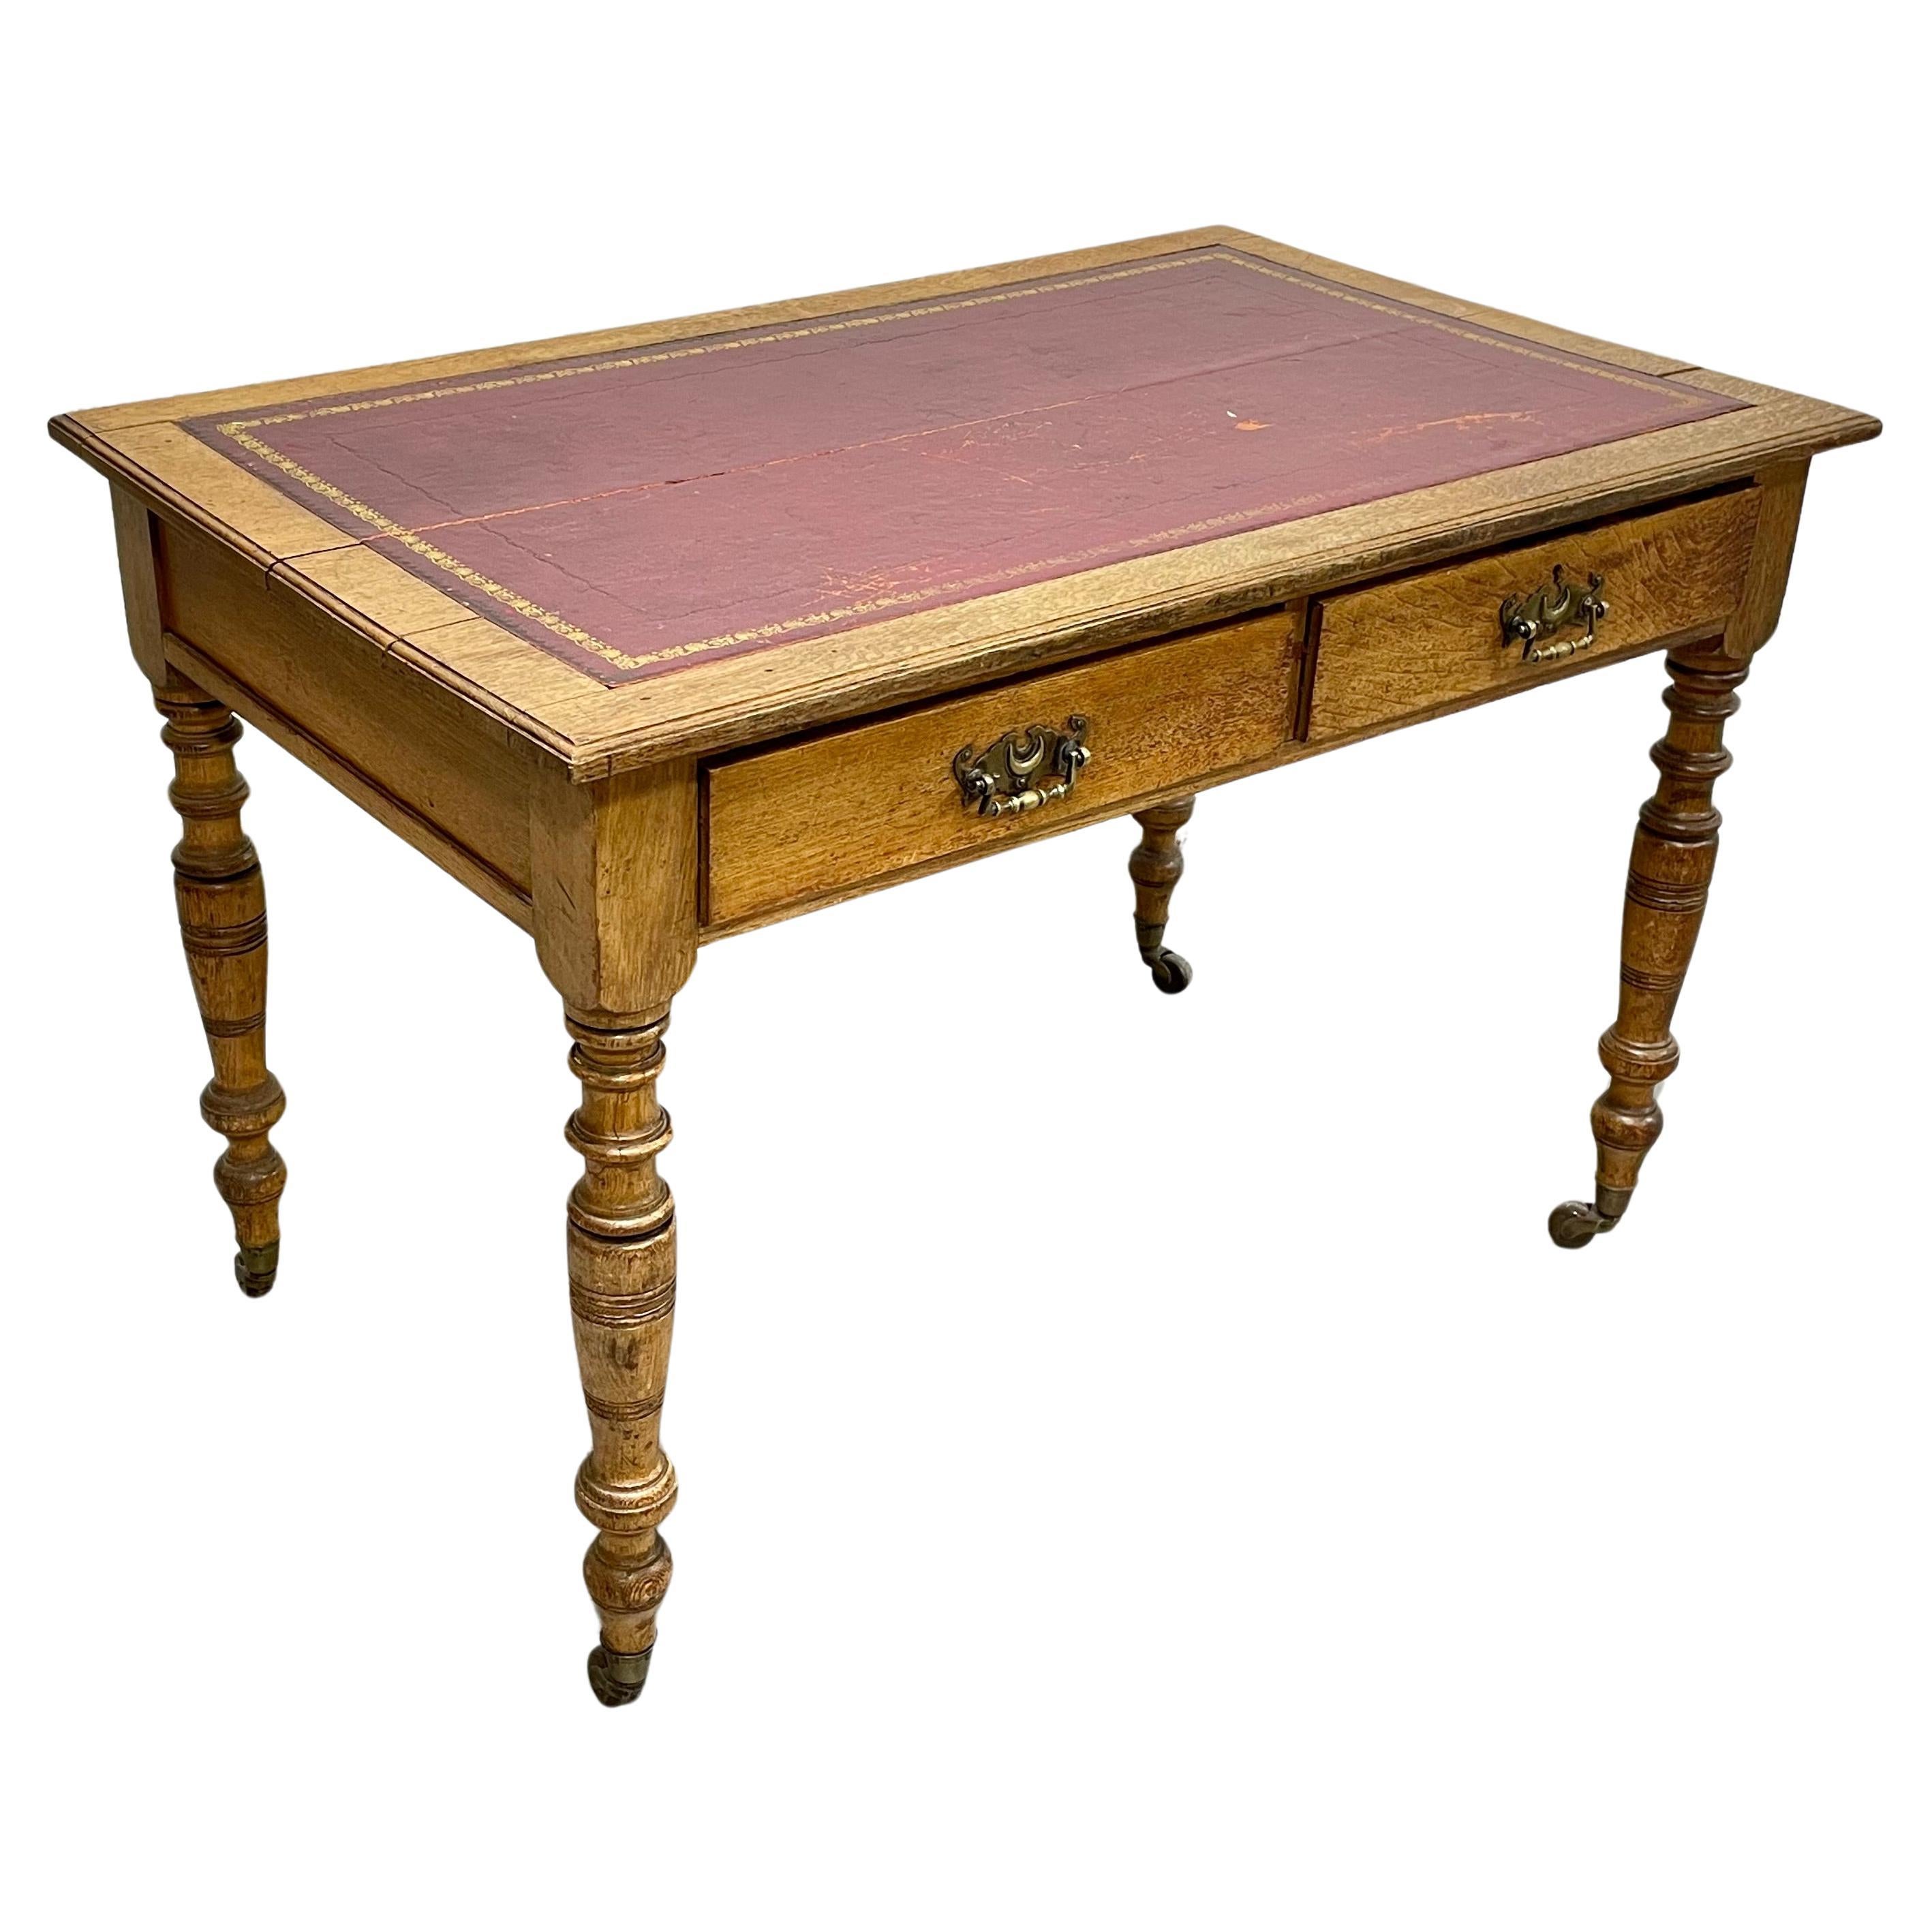 Antique Mahogany Writing Table / Desk Turned Legs Wheels, c. 1890